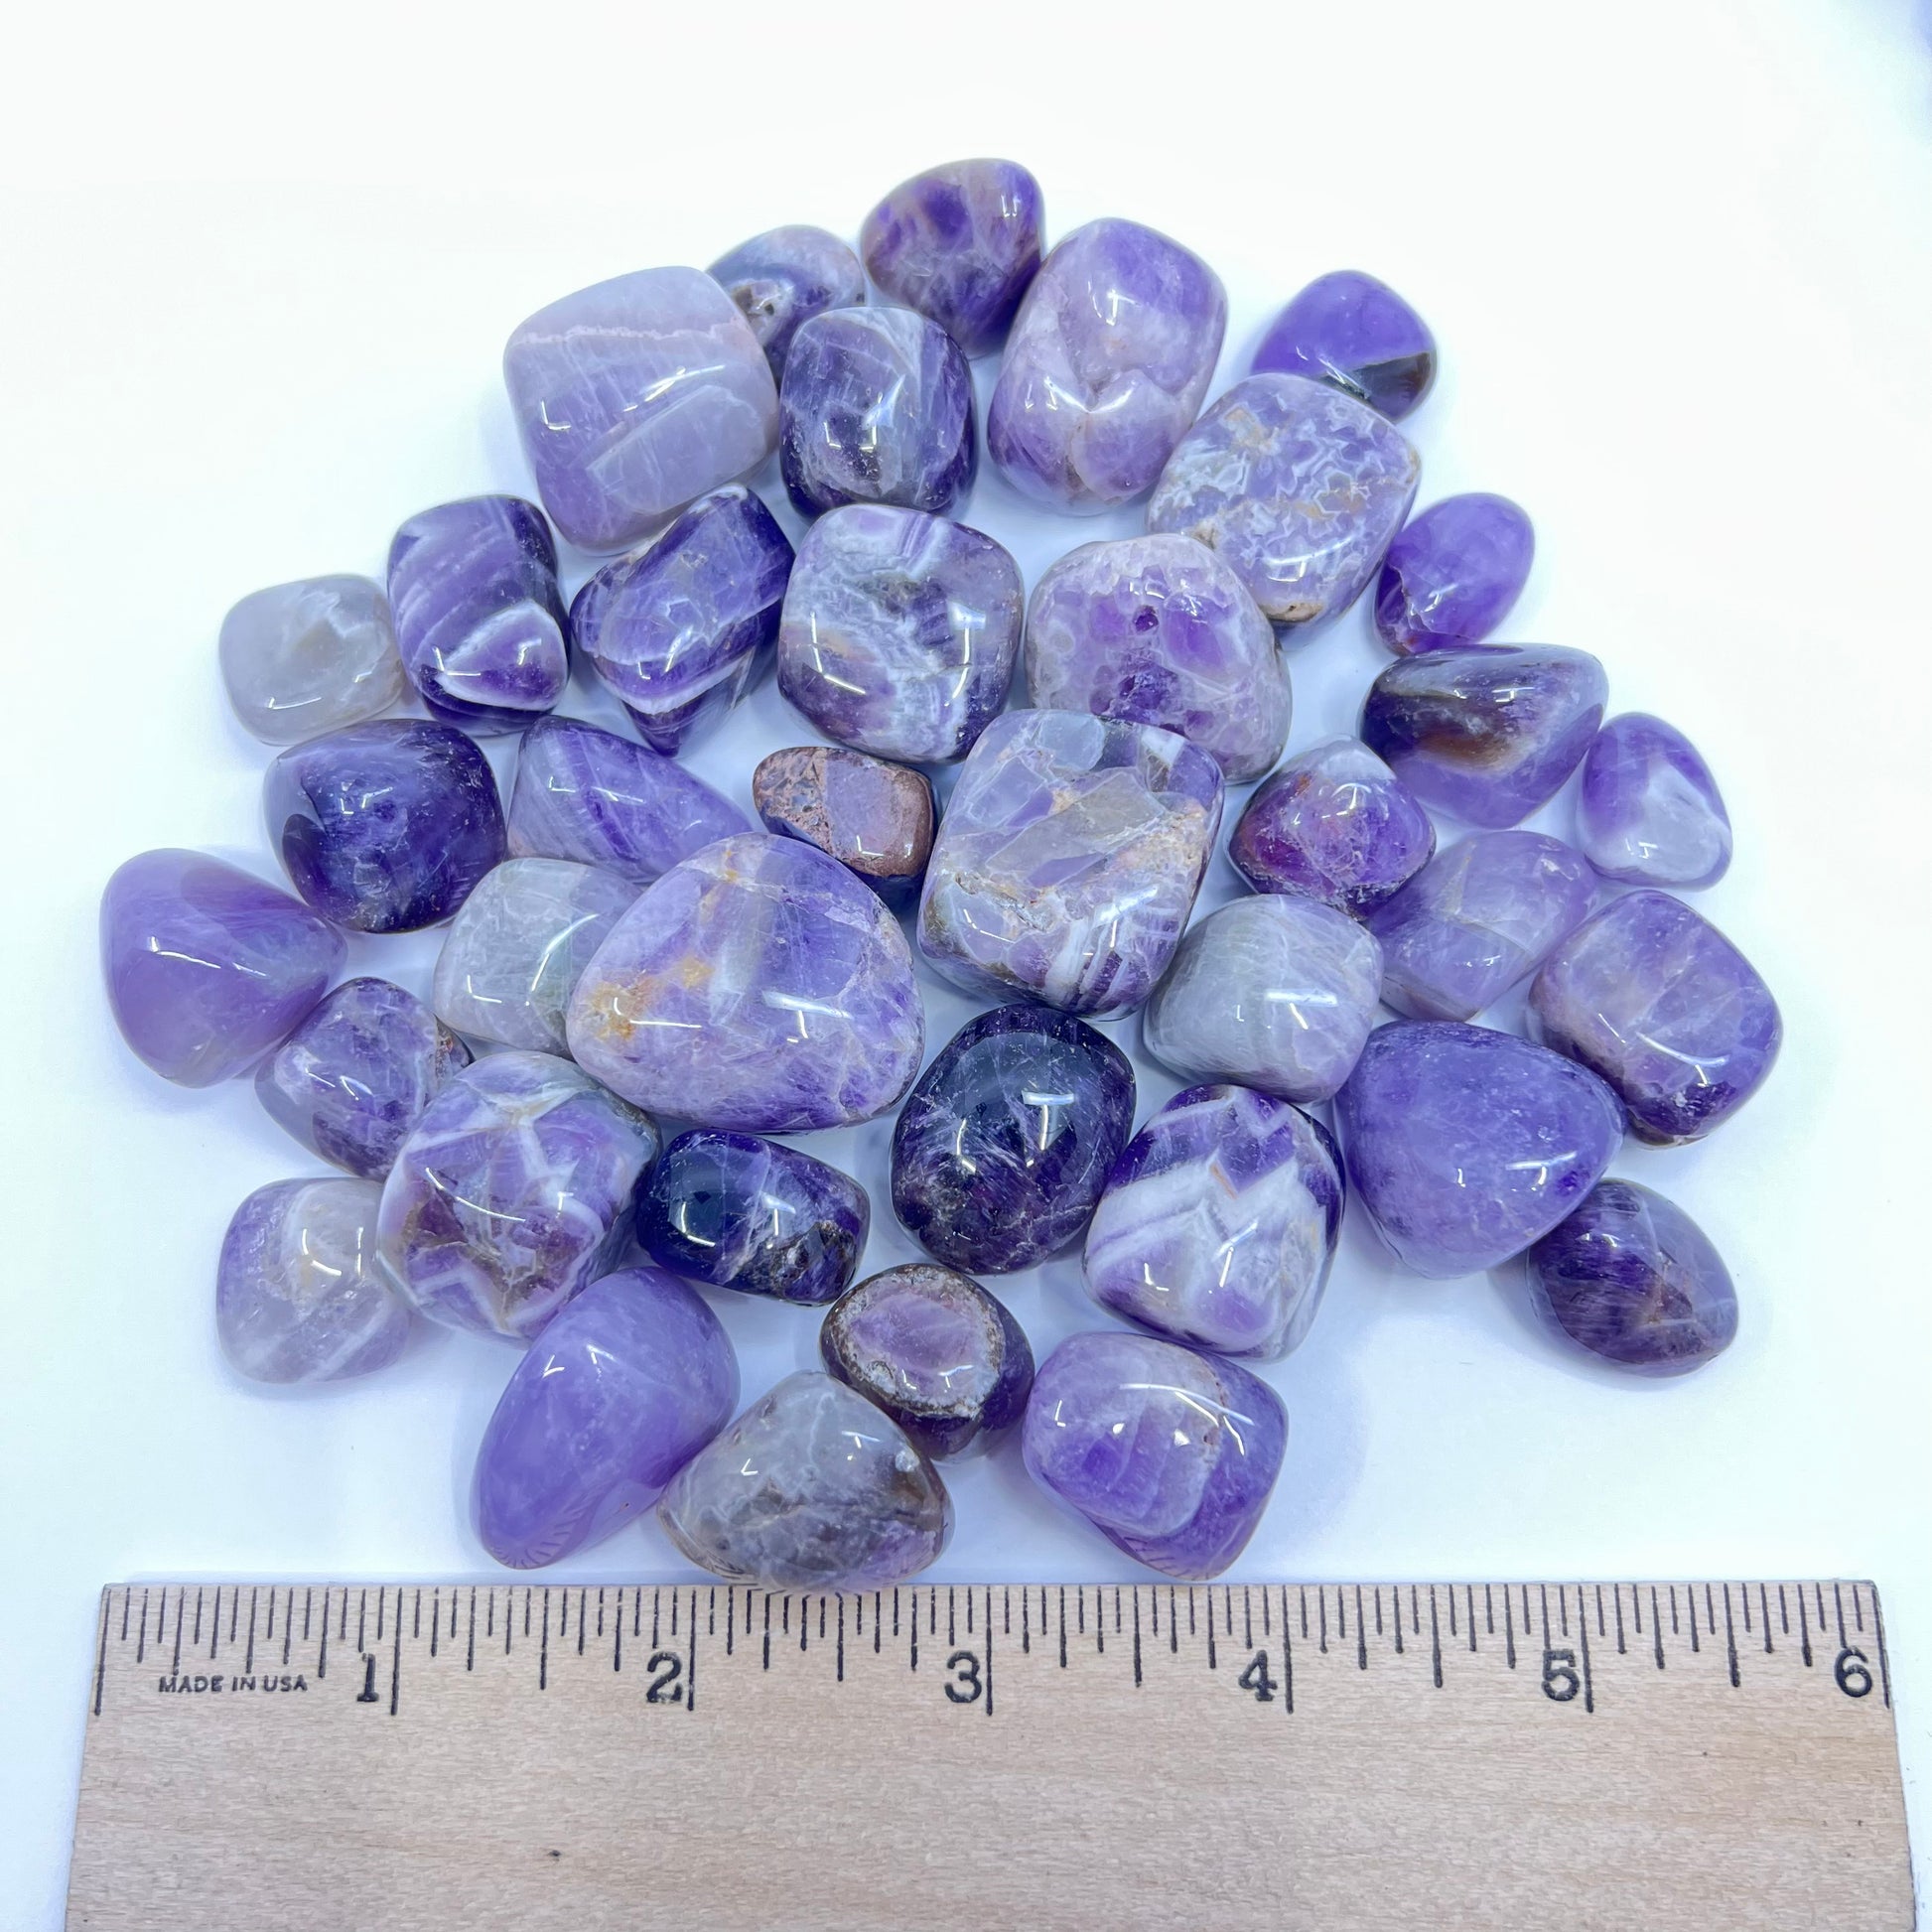 Chevron Amethyst Tumbled Stones (A Grade) 1 LB - Funky Stuff